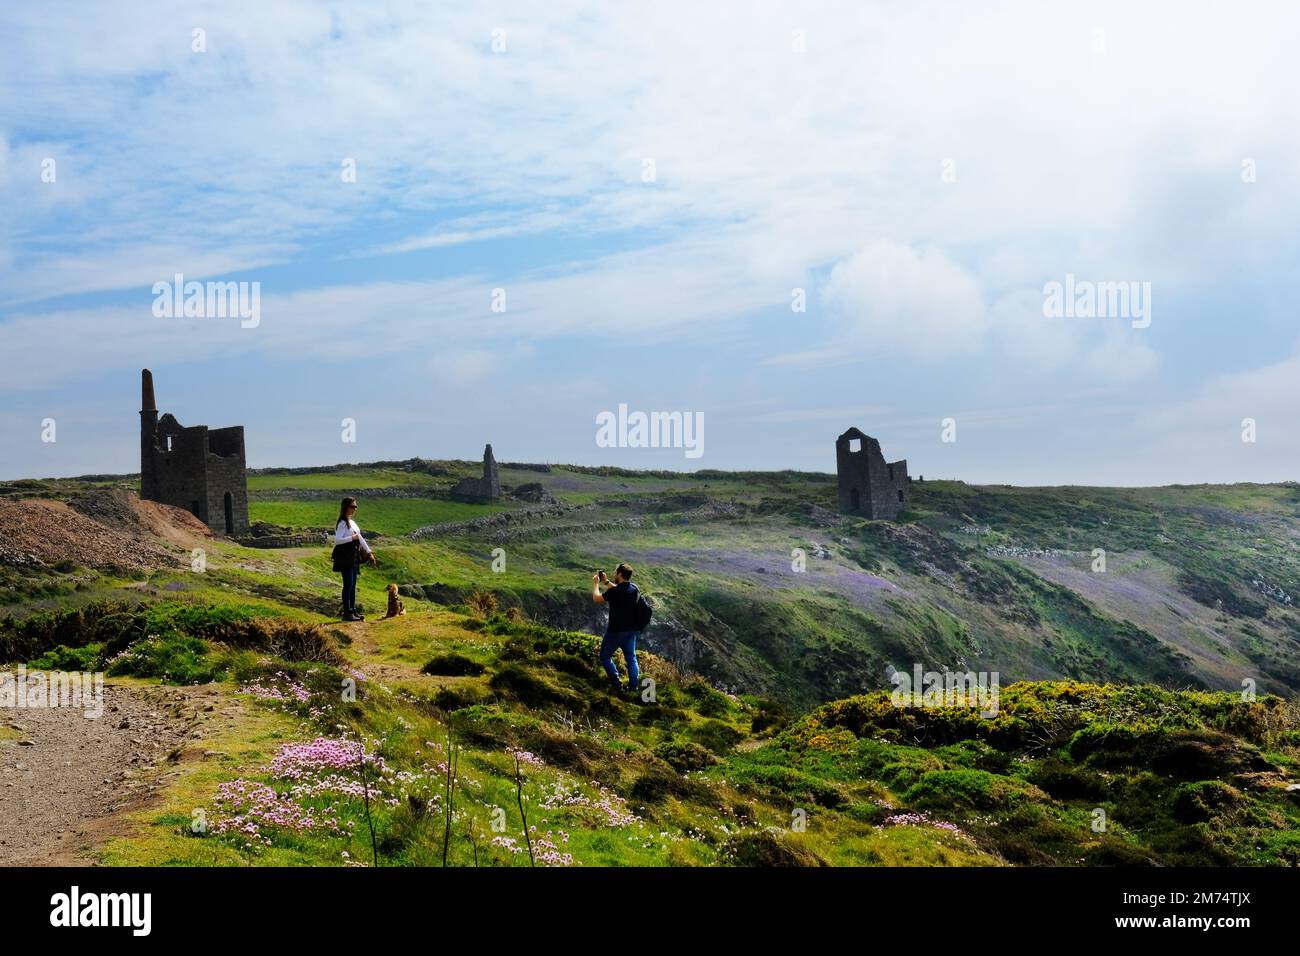 Tourists enjoying the abandoned tin mines at Botallack, a World Heritage Site, Cornwall, UK - John Gollop Stock Photo